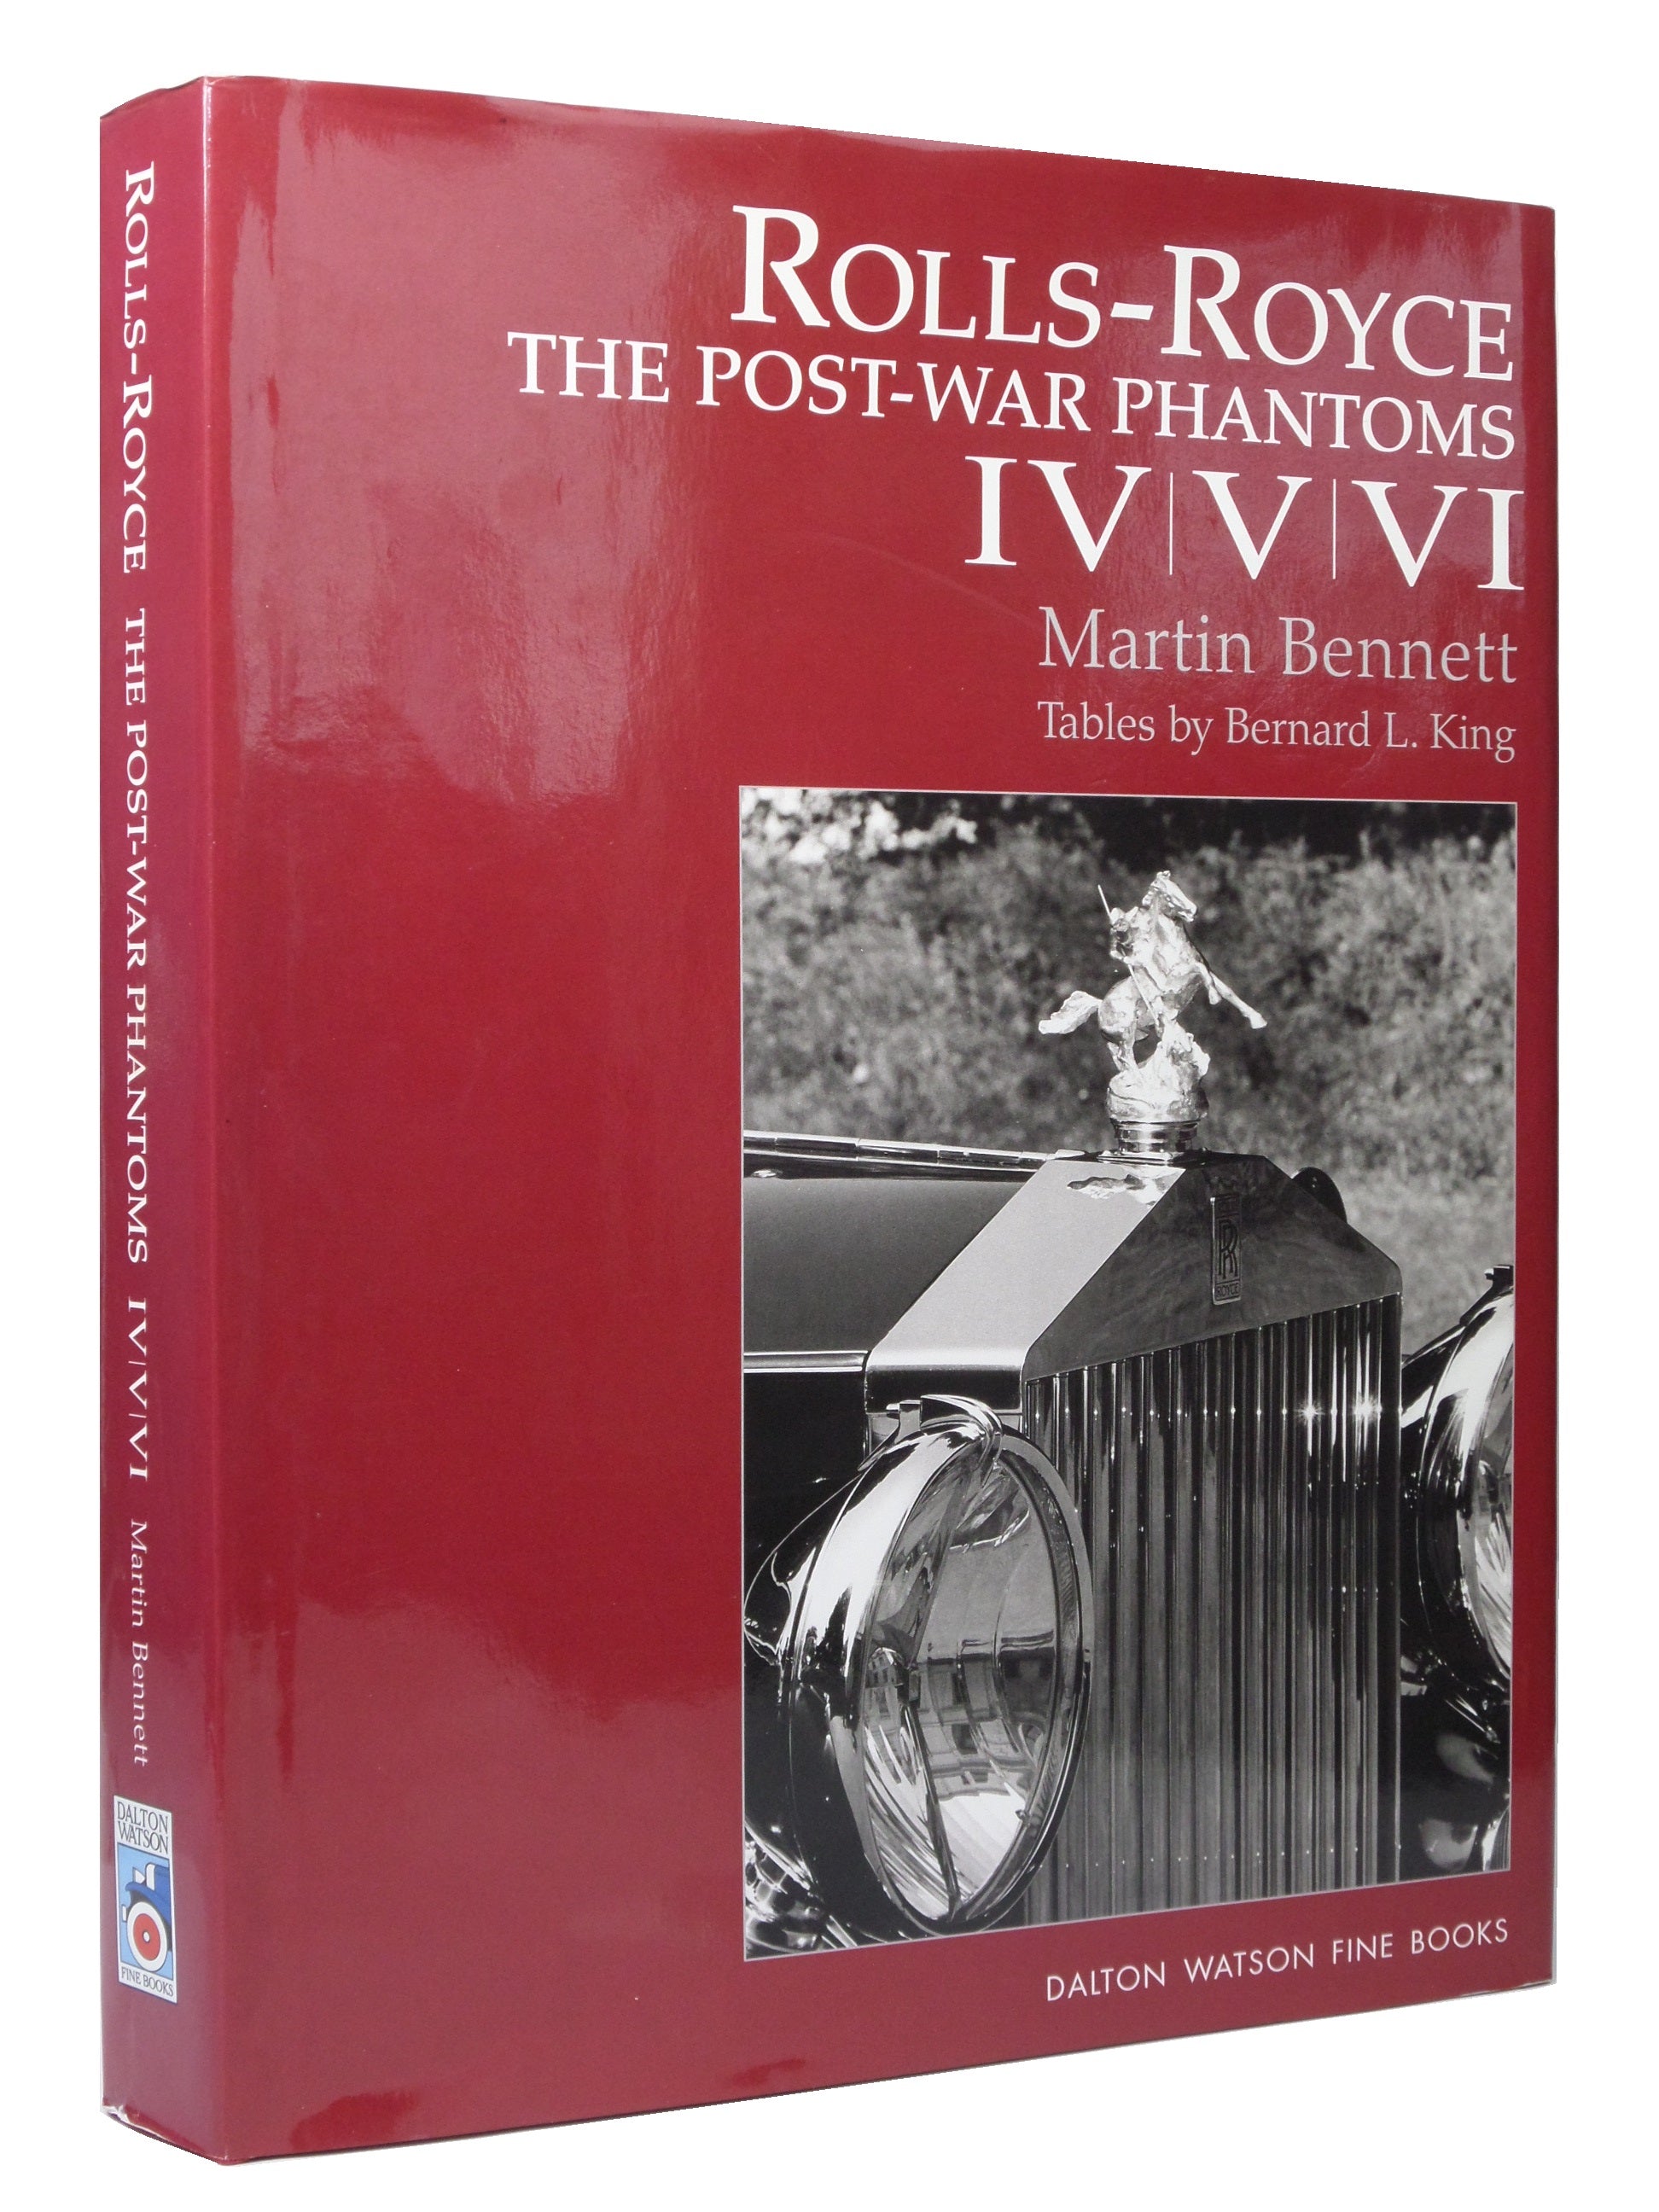 ROLLS-ROYCE: THE POST-WAR PHANTOMS IV, V, VI BY MARTIN BENNETT 2008 FIRST EDITION